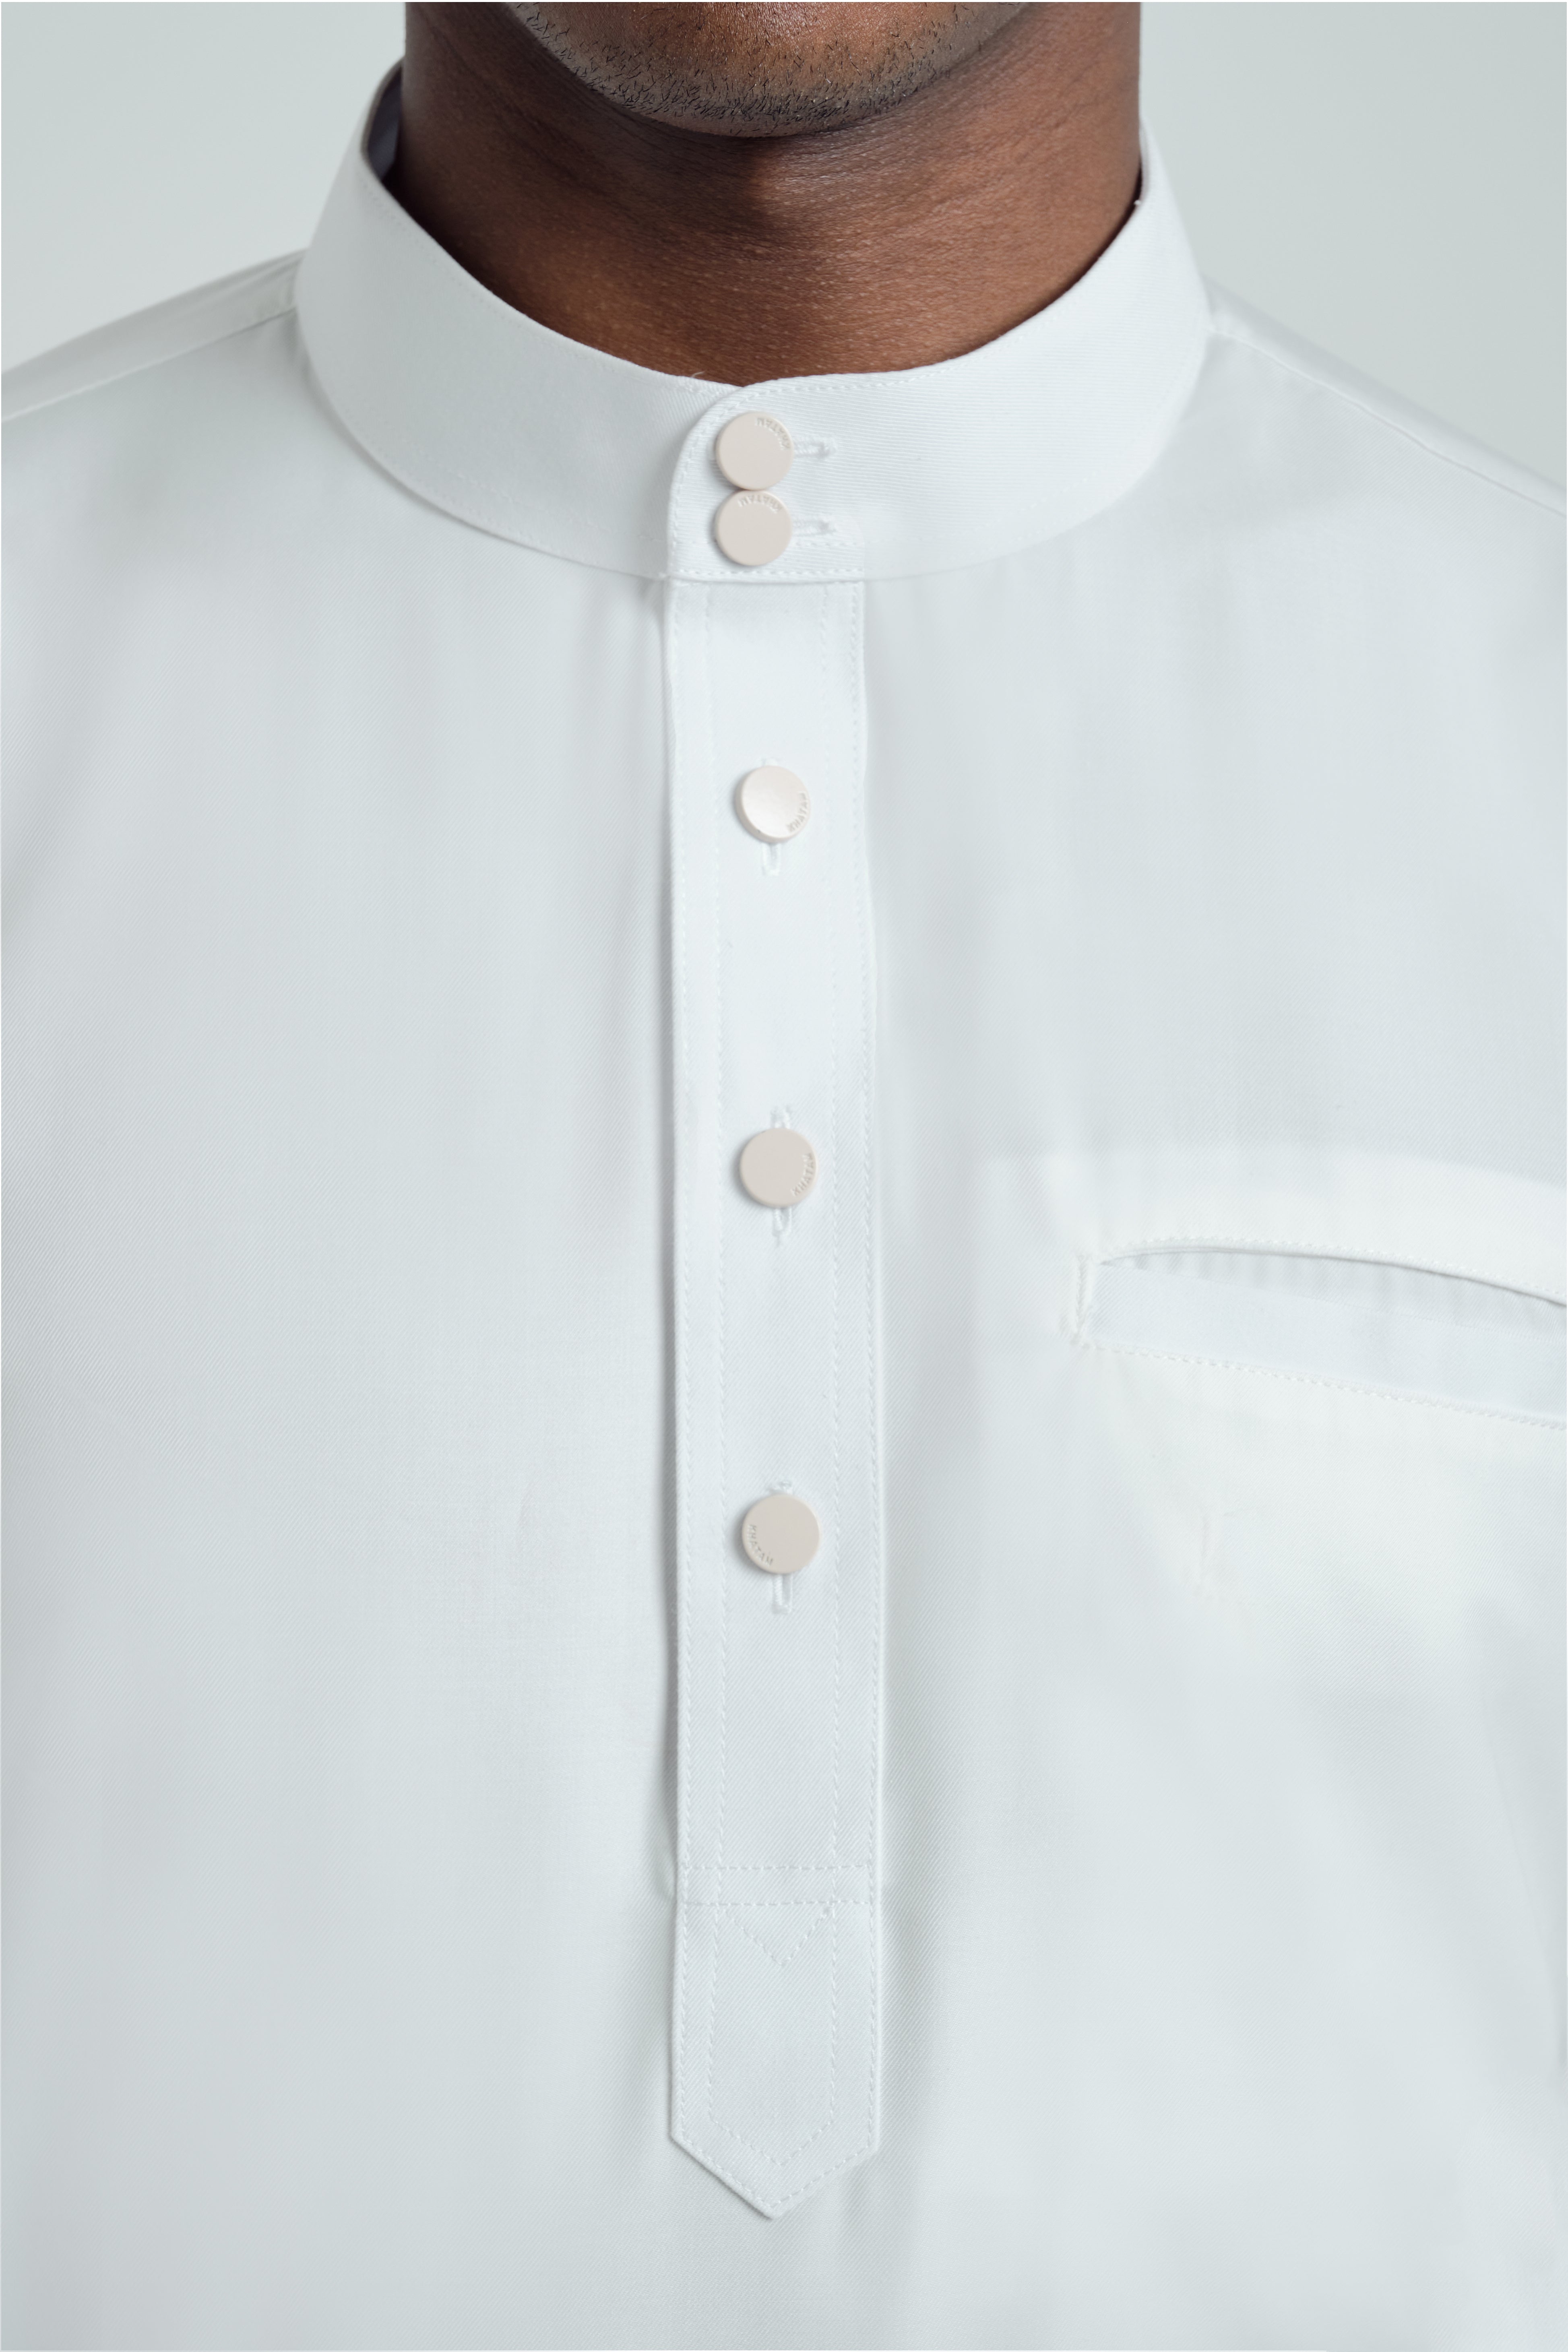 Patawali Baju Melayu Cekak Musang - Blanc White